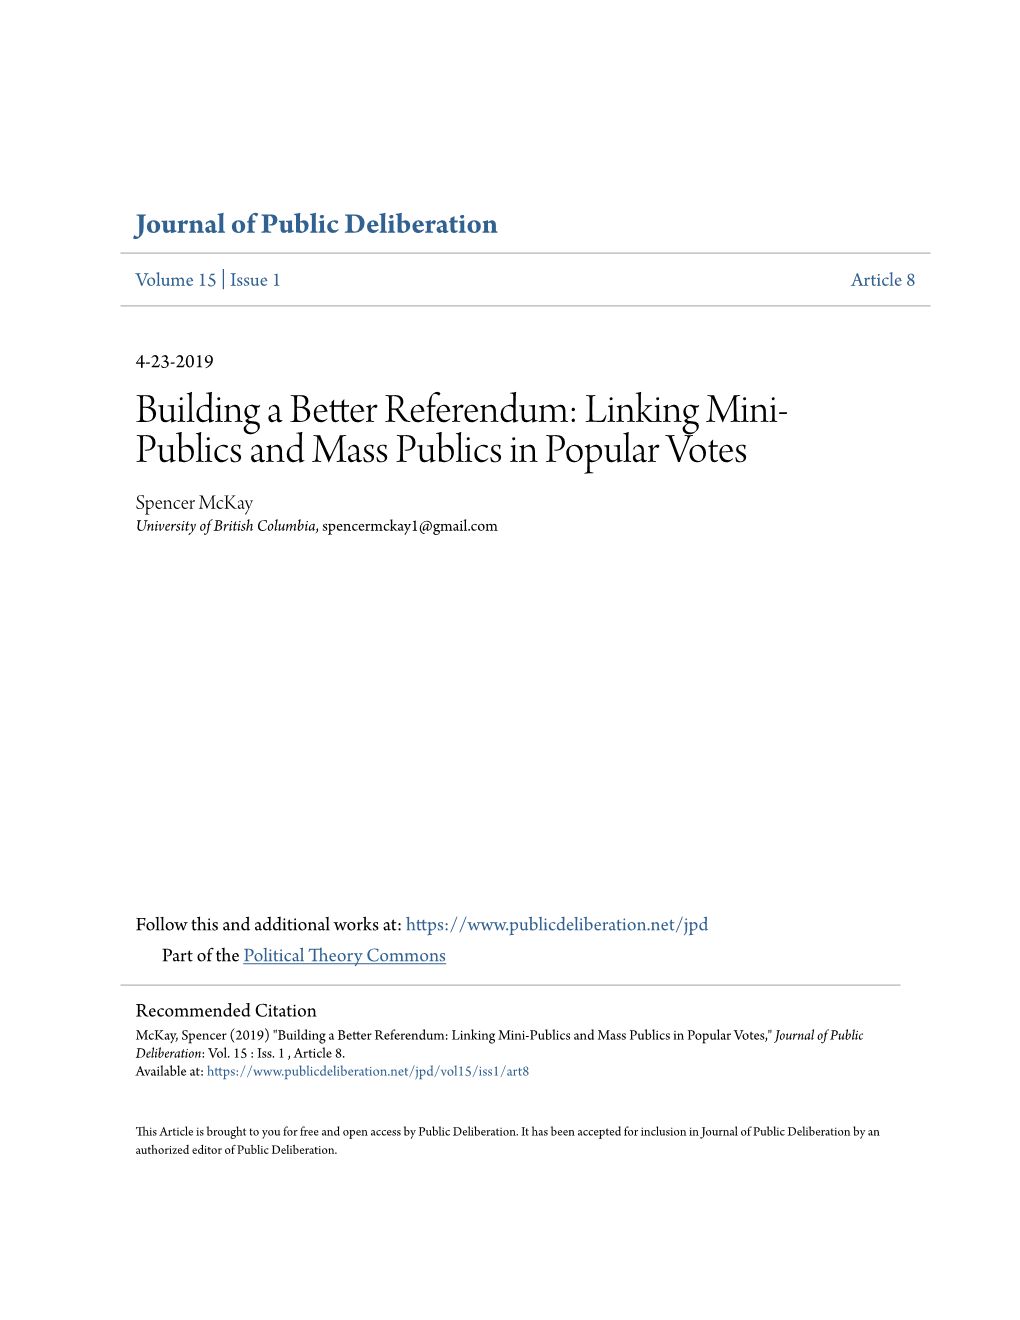 Building a Better Referendum: Linking Mini-Publics and Mass Publics in Popular Votes," Journal of Public Deliberation: Vol